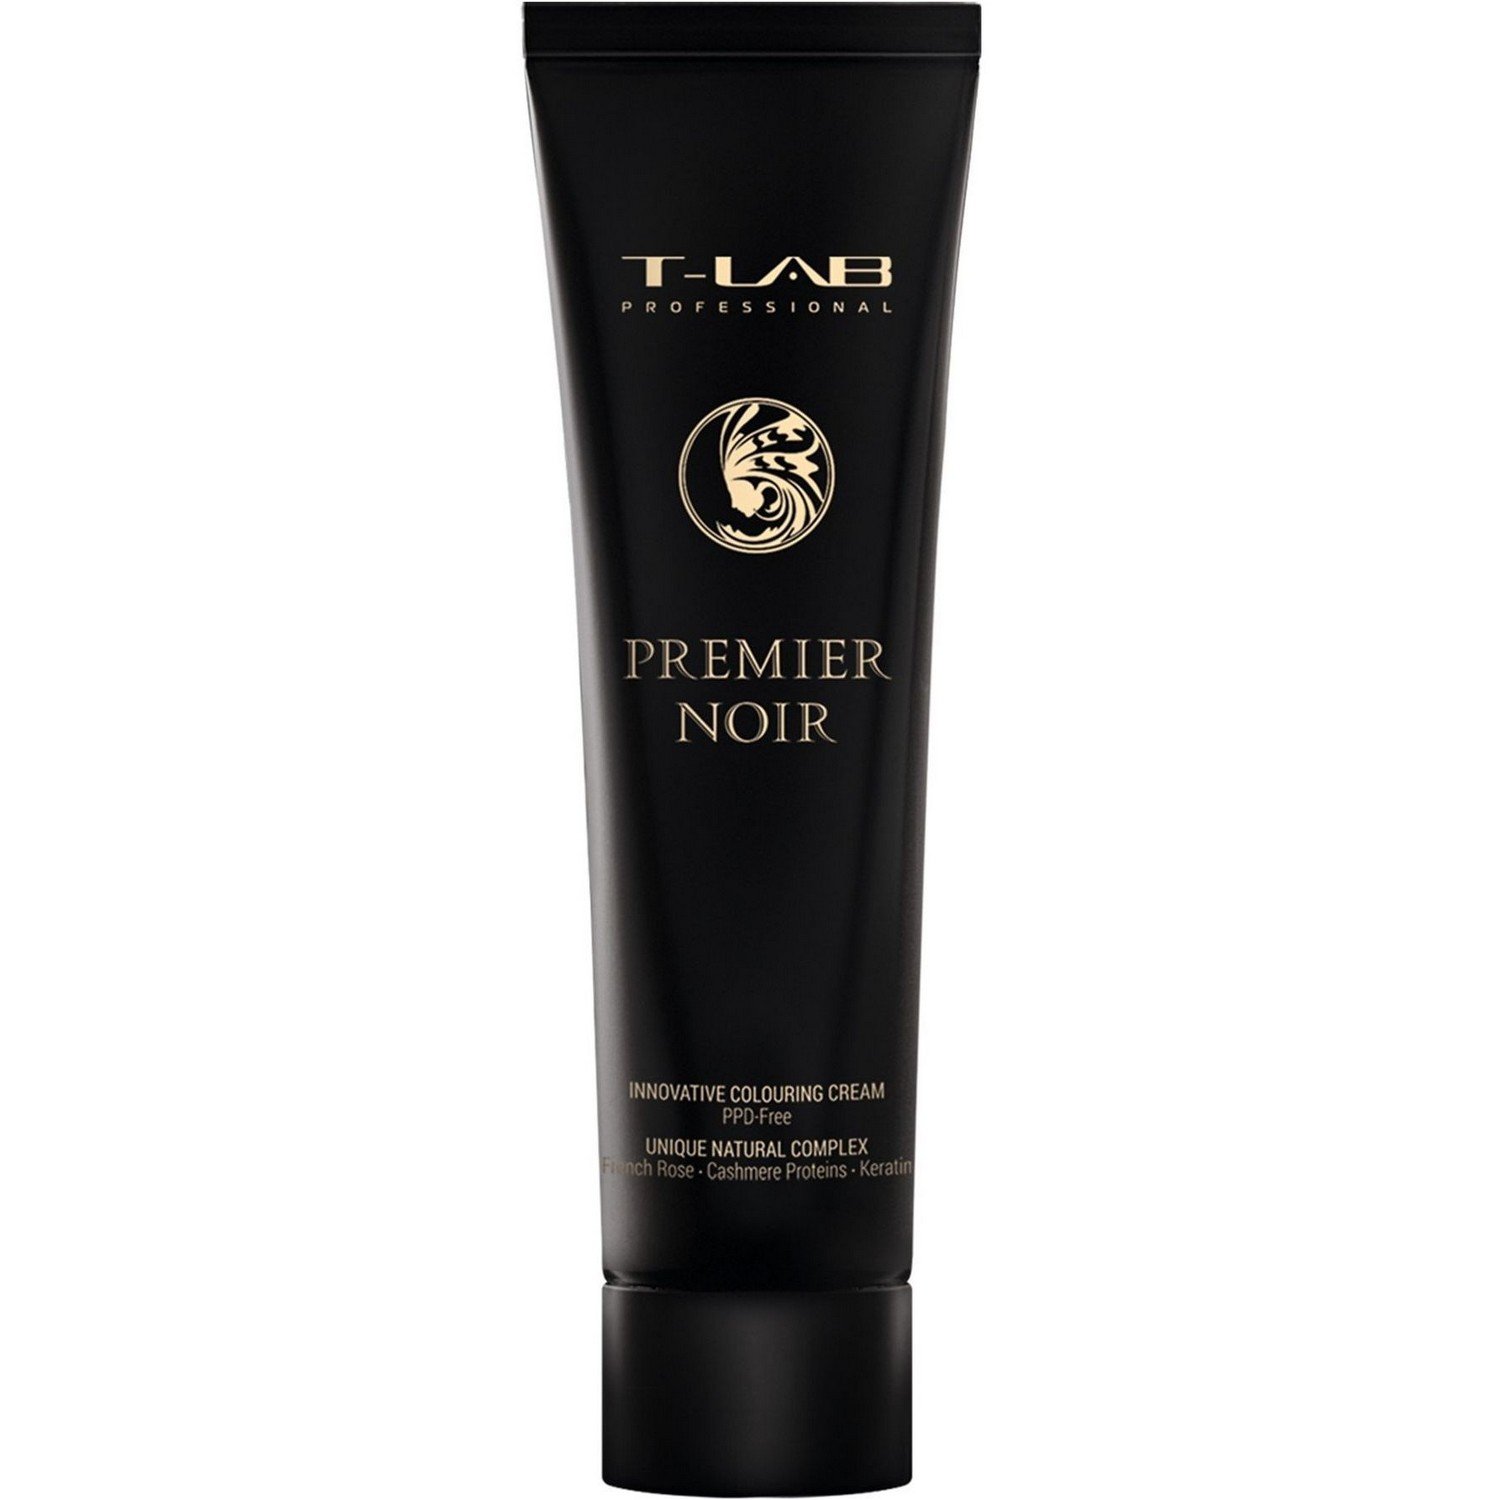 Крем-краска T-LAB Professional Premier Noir colouring cream, оттенок 6.12 (dark ash iridescent blonde) - фото 1